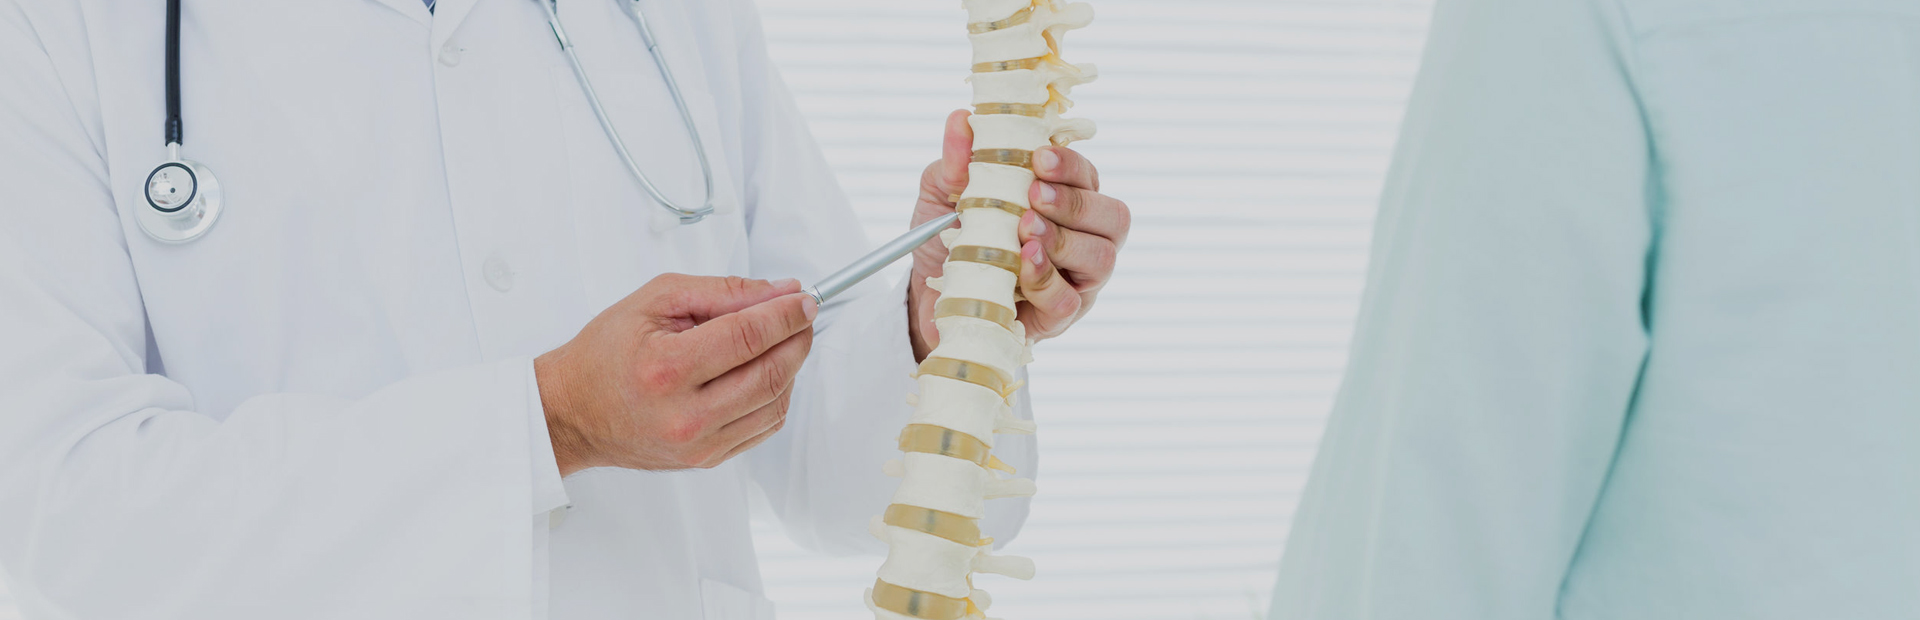 Dr Stuart Porter explores the anatomy of the spine